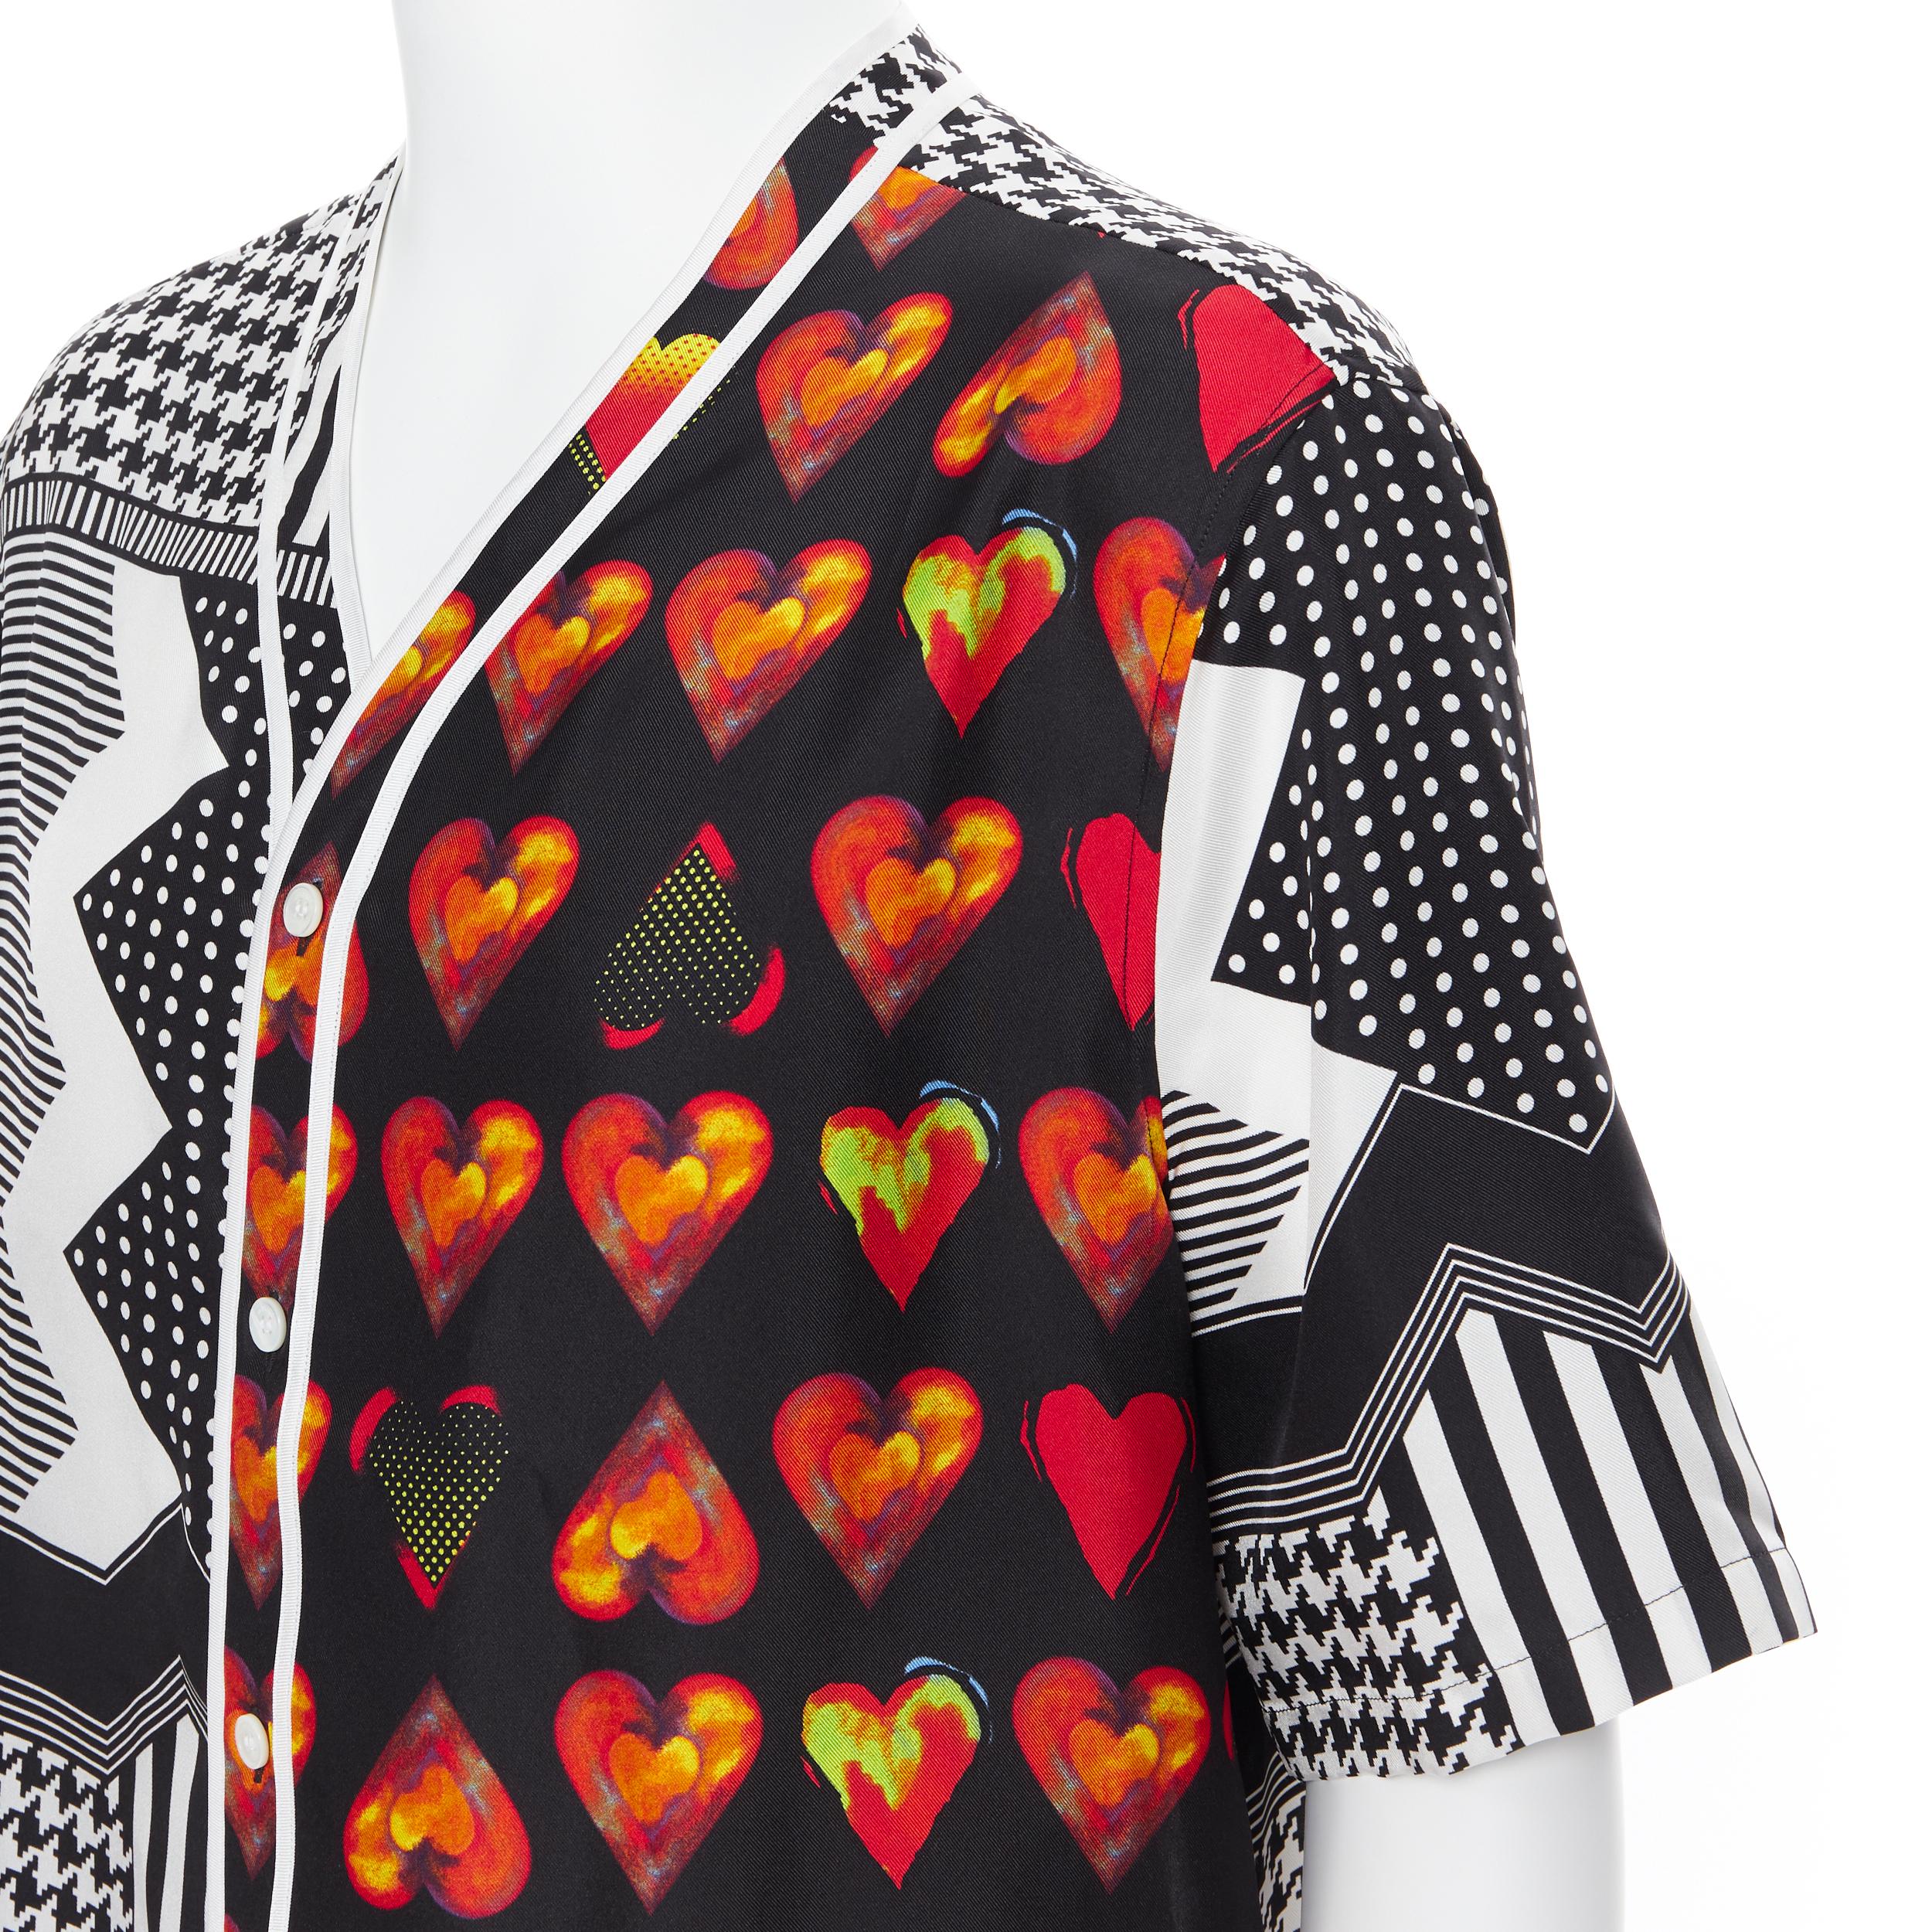 new VERSACE 2019 100% silk Geometric Love Heart geometric baseball shirt EU39 M
Brand: Versace
Designer: Donatella Versace
Collection: Pre-Fall 2019
Model Name / Style: Silk shirt
Material: Silk
Color: Black, red
Pattern: Abstract
Extra Detail: